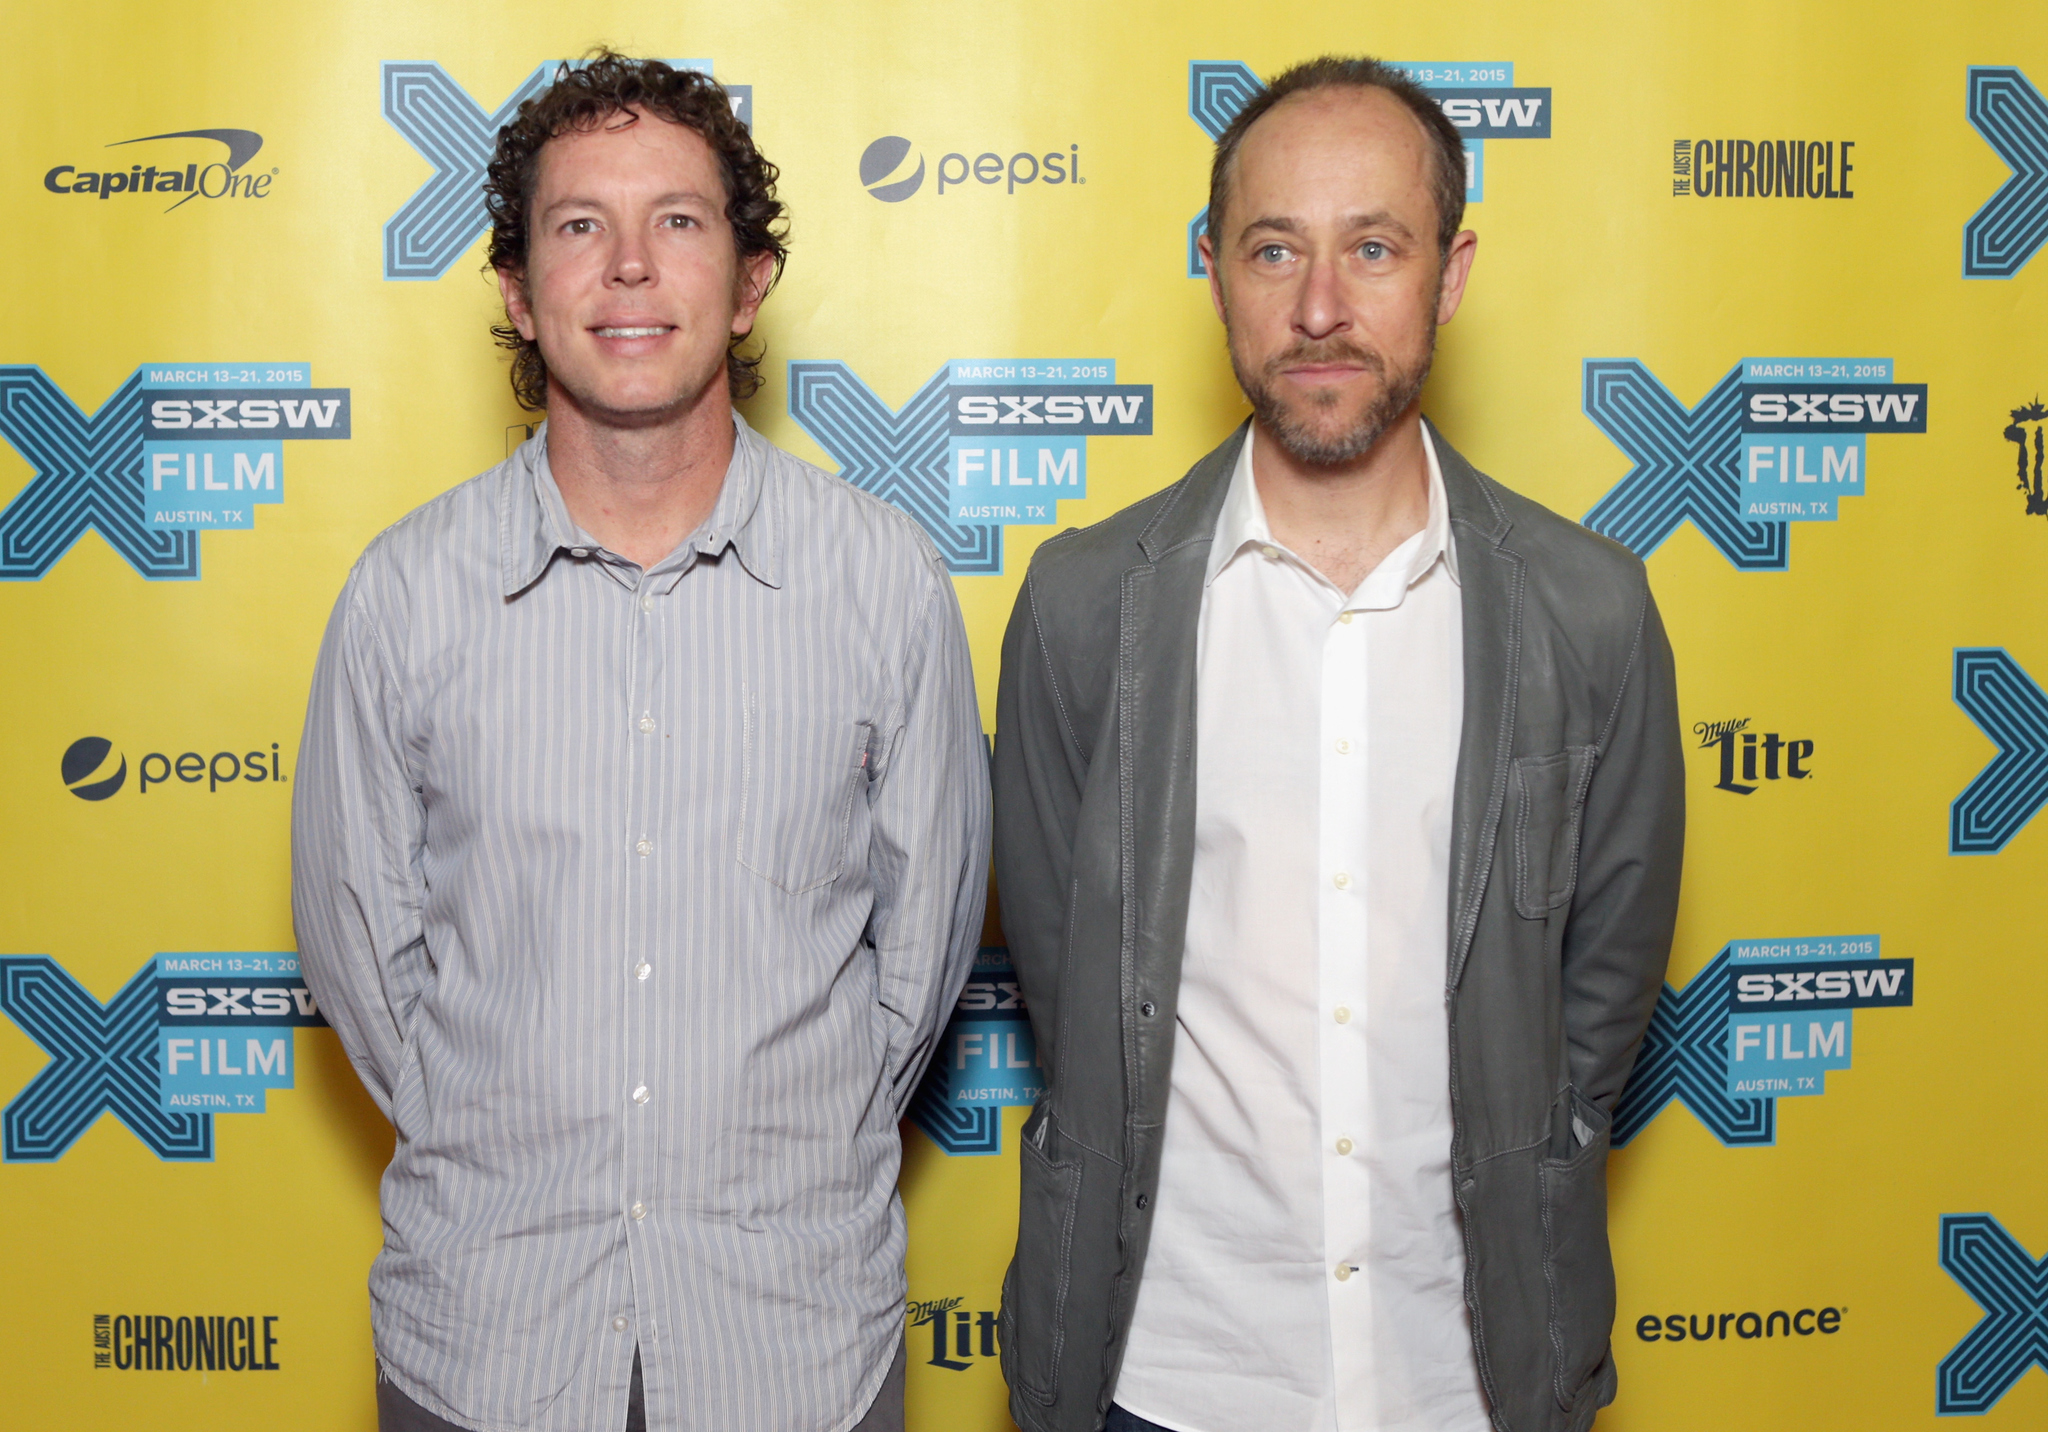 Matt Nix and Ben Wexler at event of The Comedians (2015)